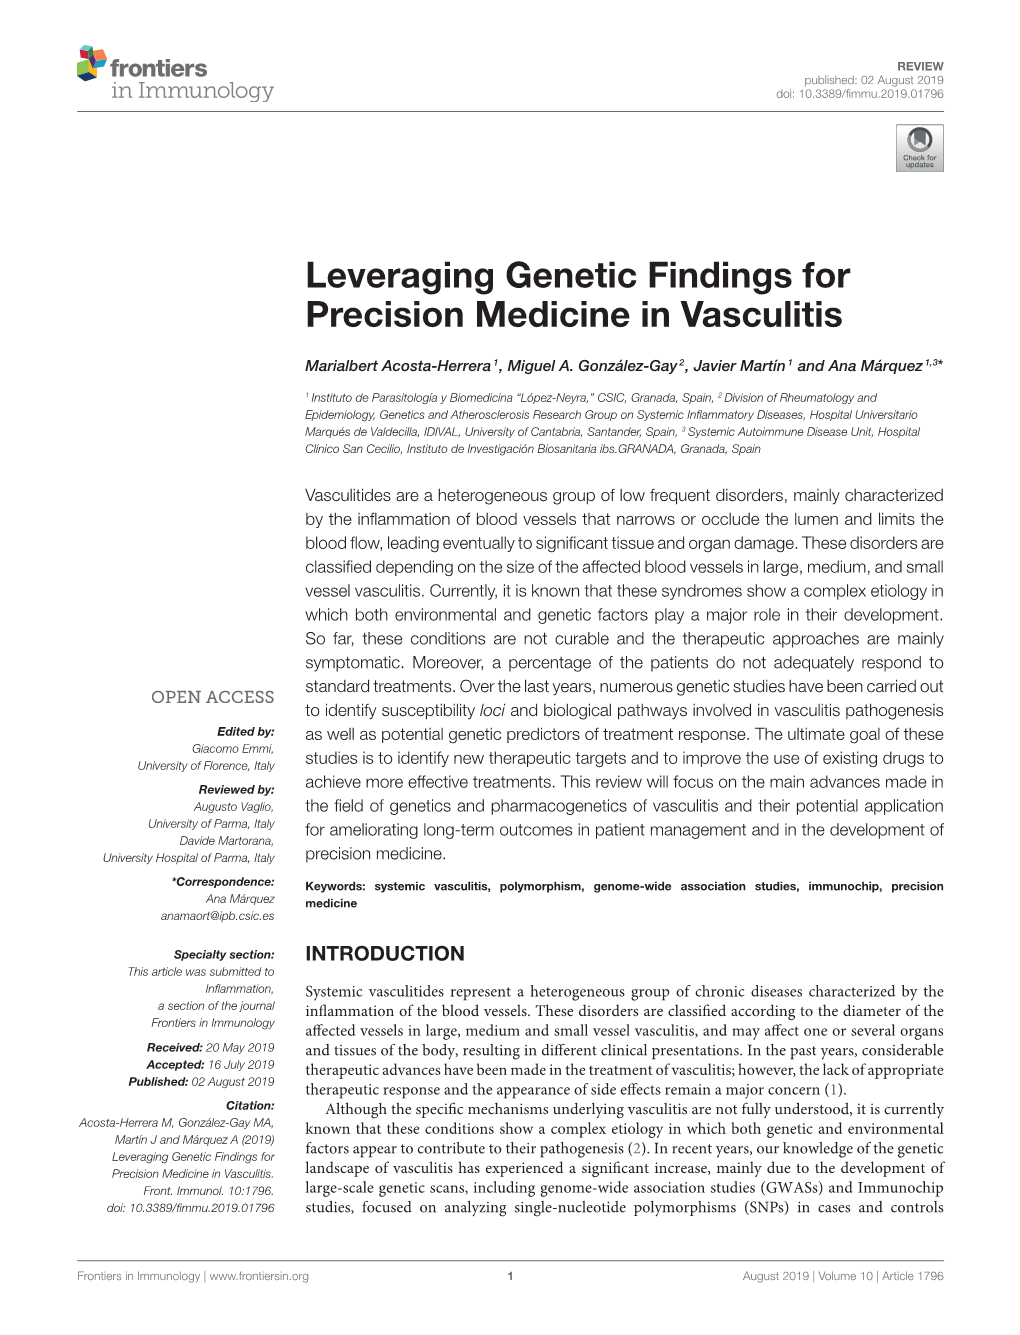 Leveraging Genetic Findings for Precision Medicine in Vasculitis